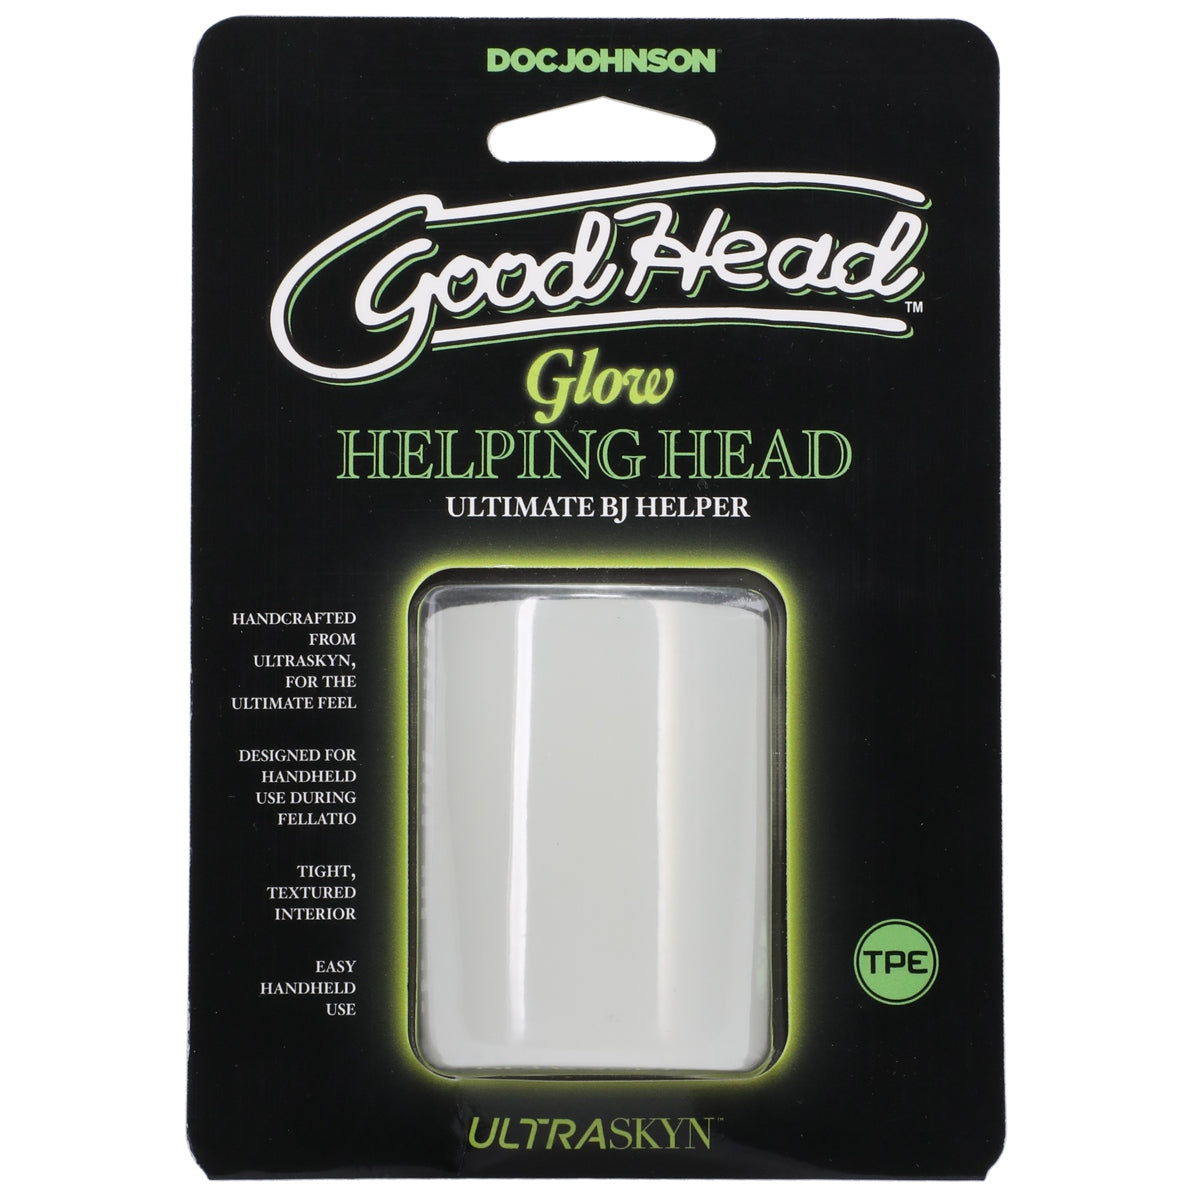 Goodhead Glow in the Dark Helping Head (8312841601263)